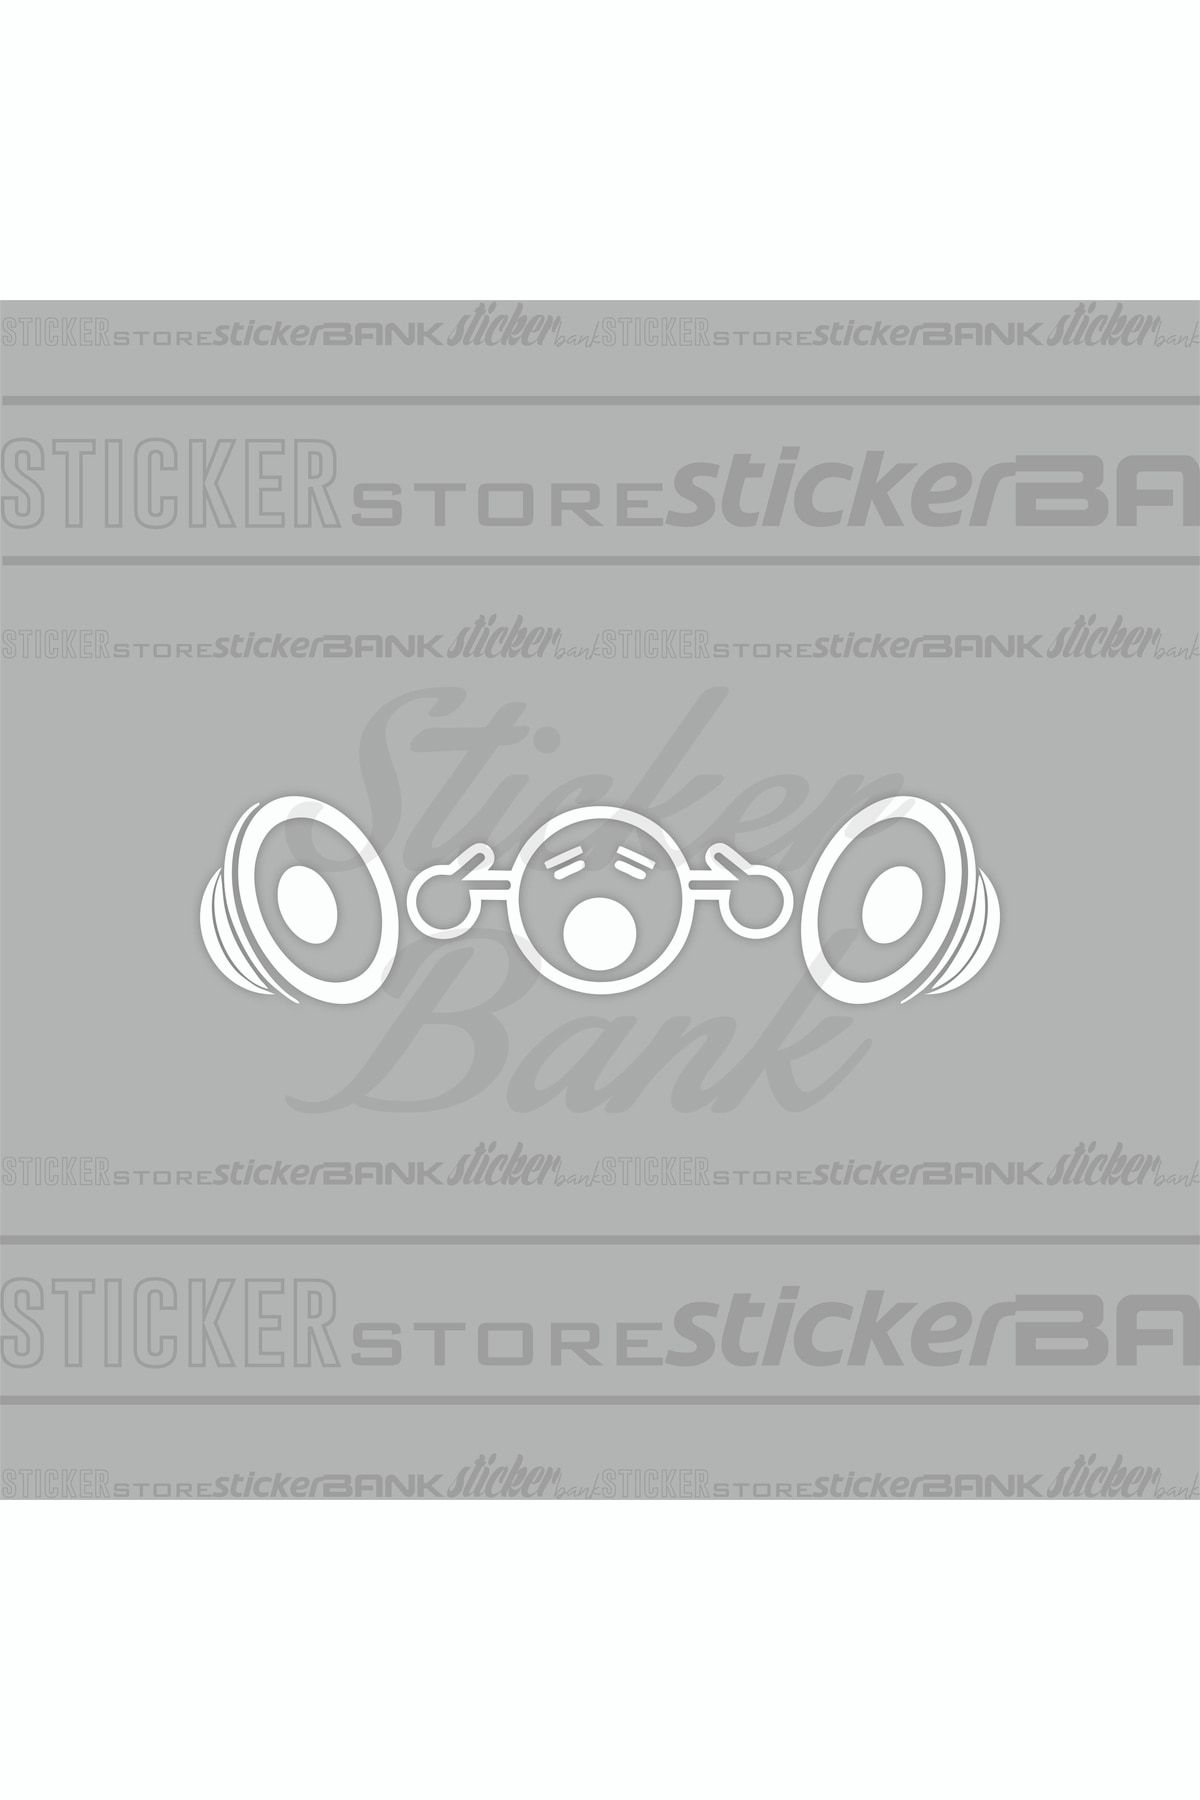 Sticker Bank Araba Sticker Ses Görseli